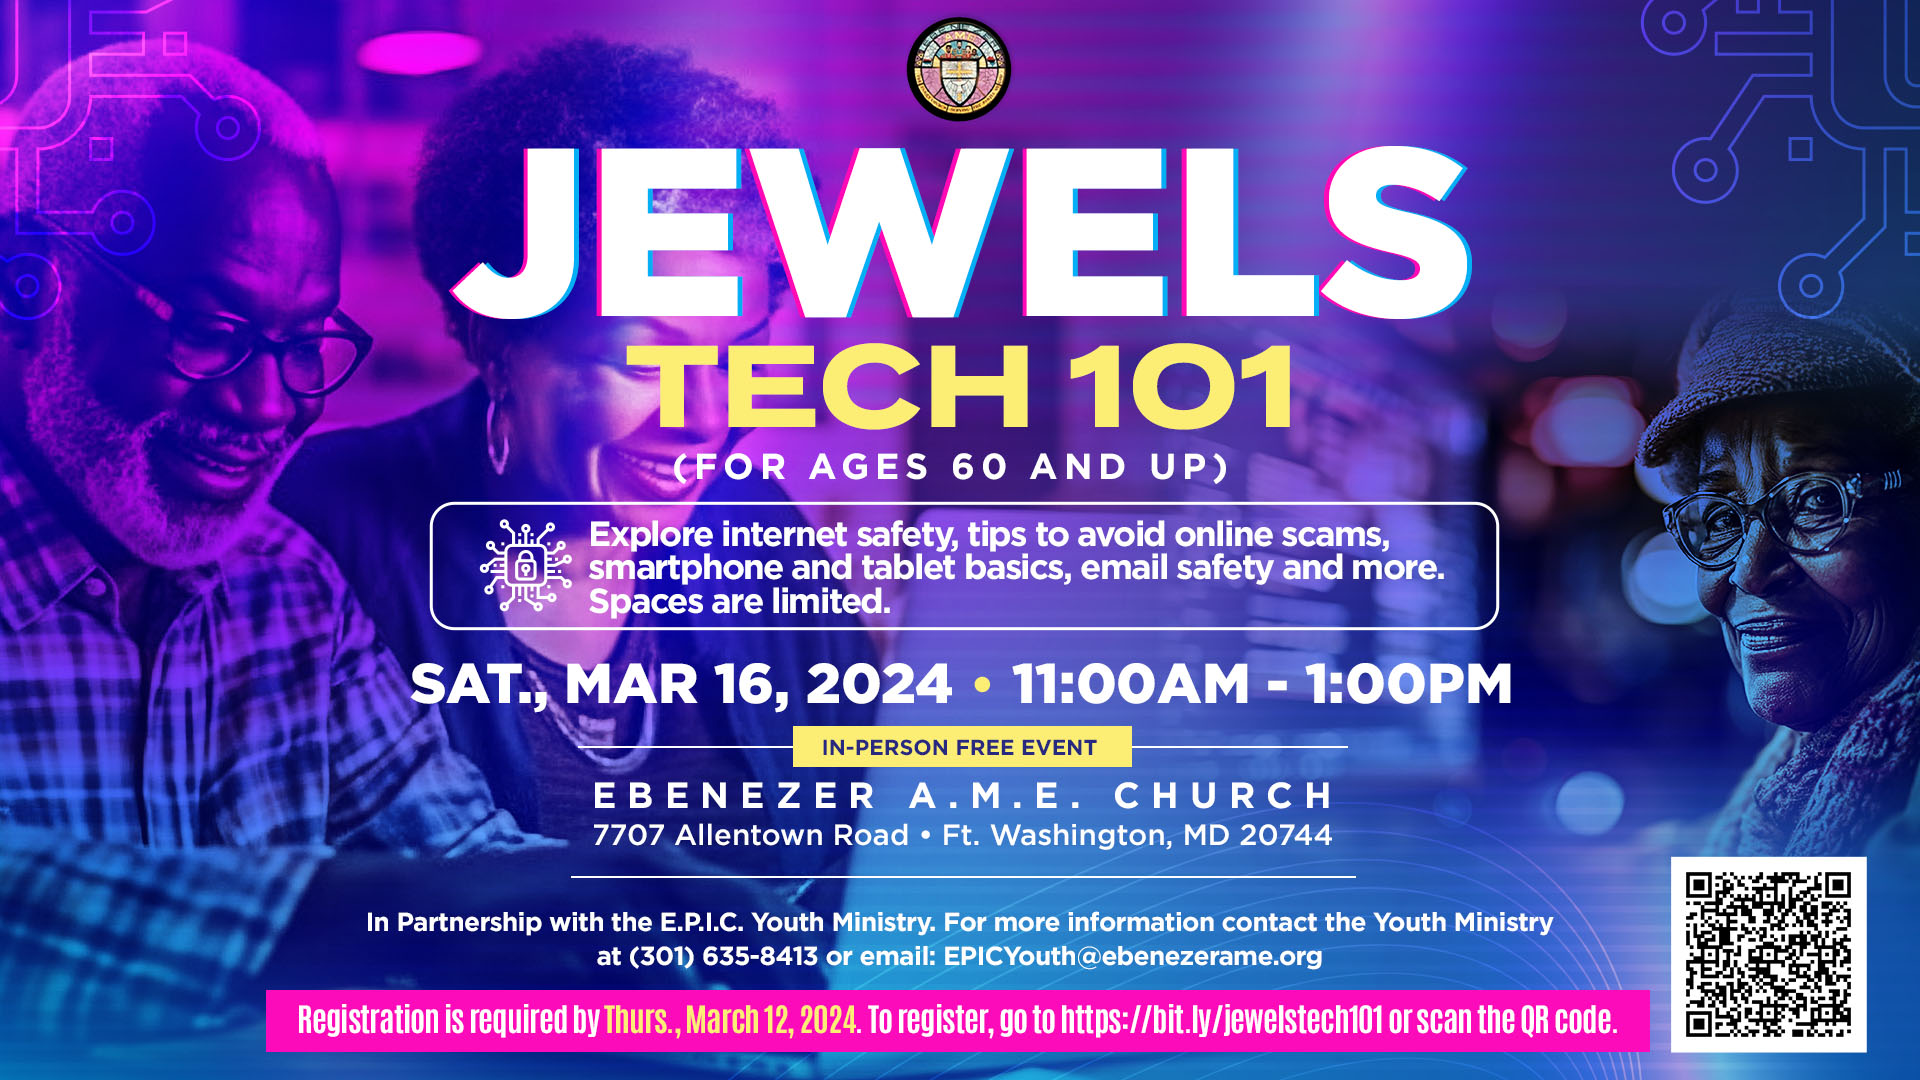 Jewels Tech 101 Workshop on Sat., Mar 16